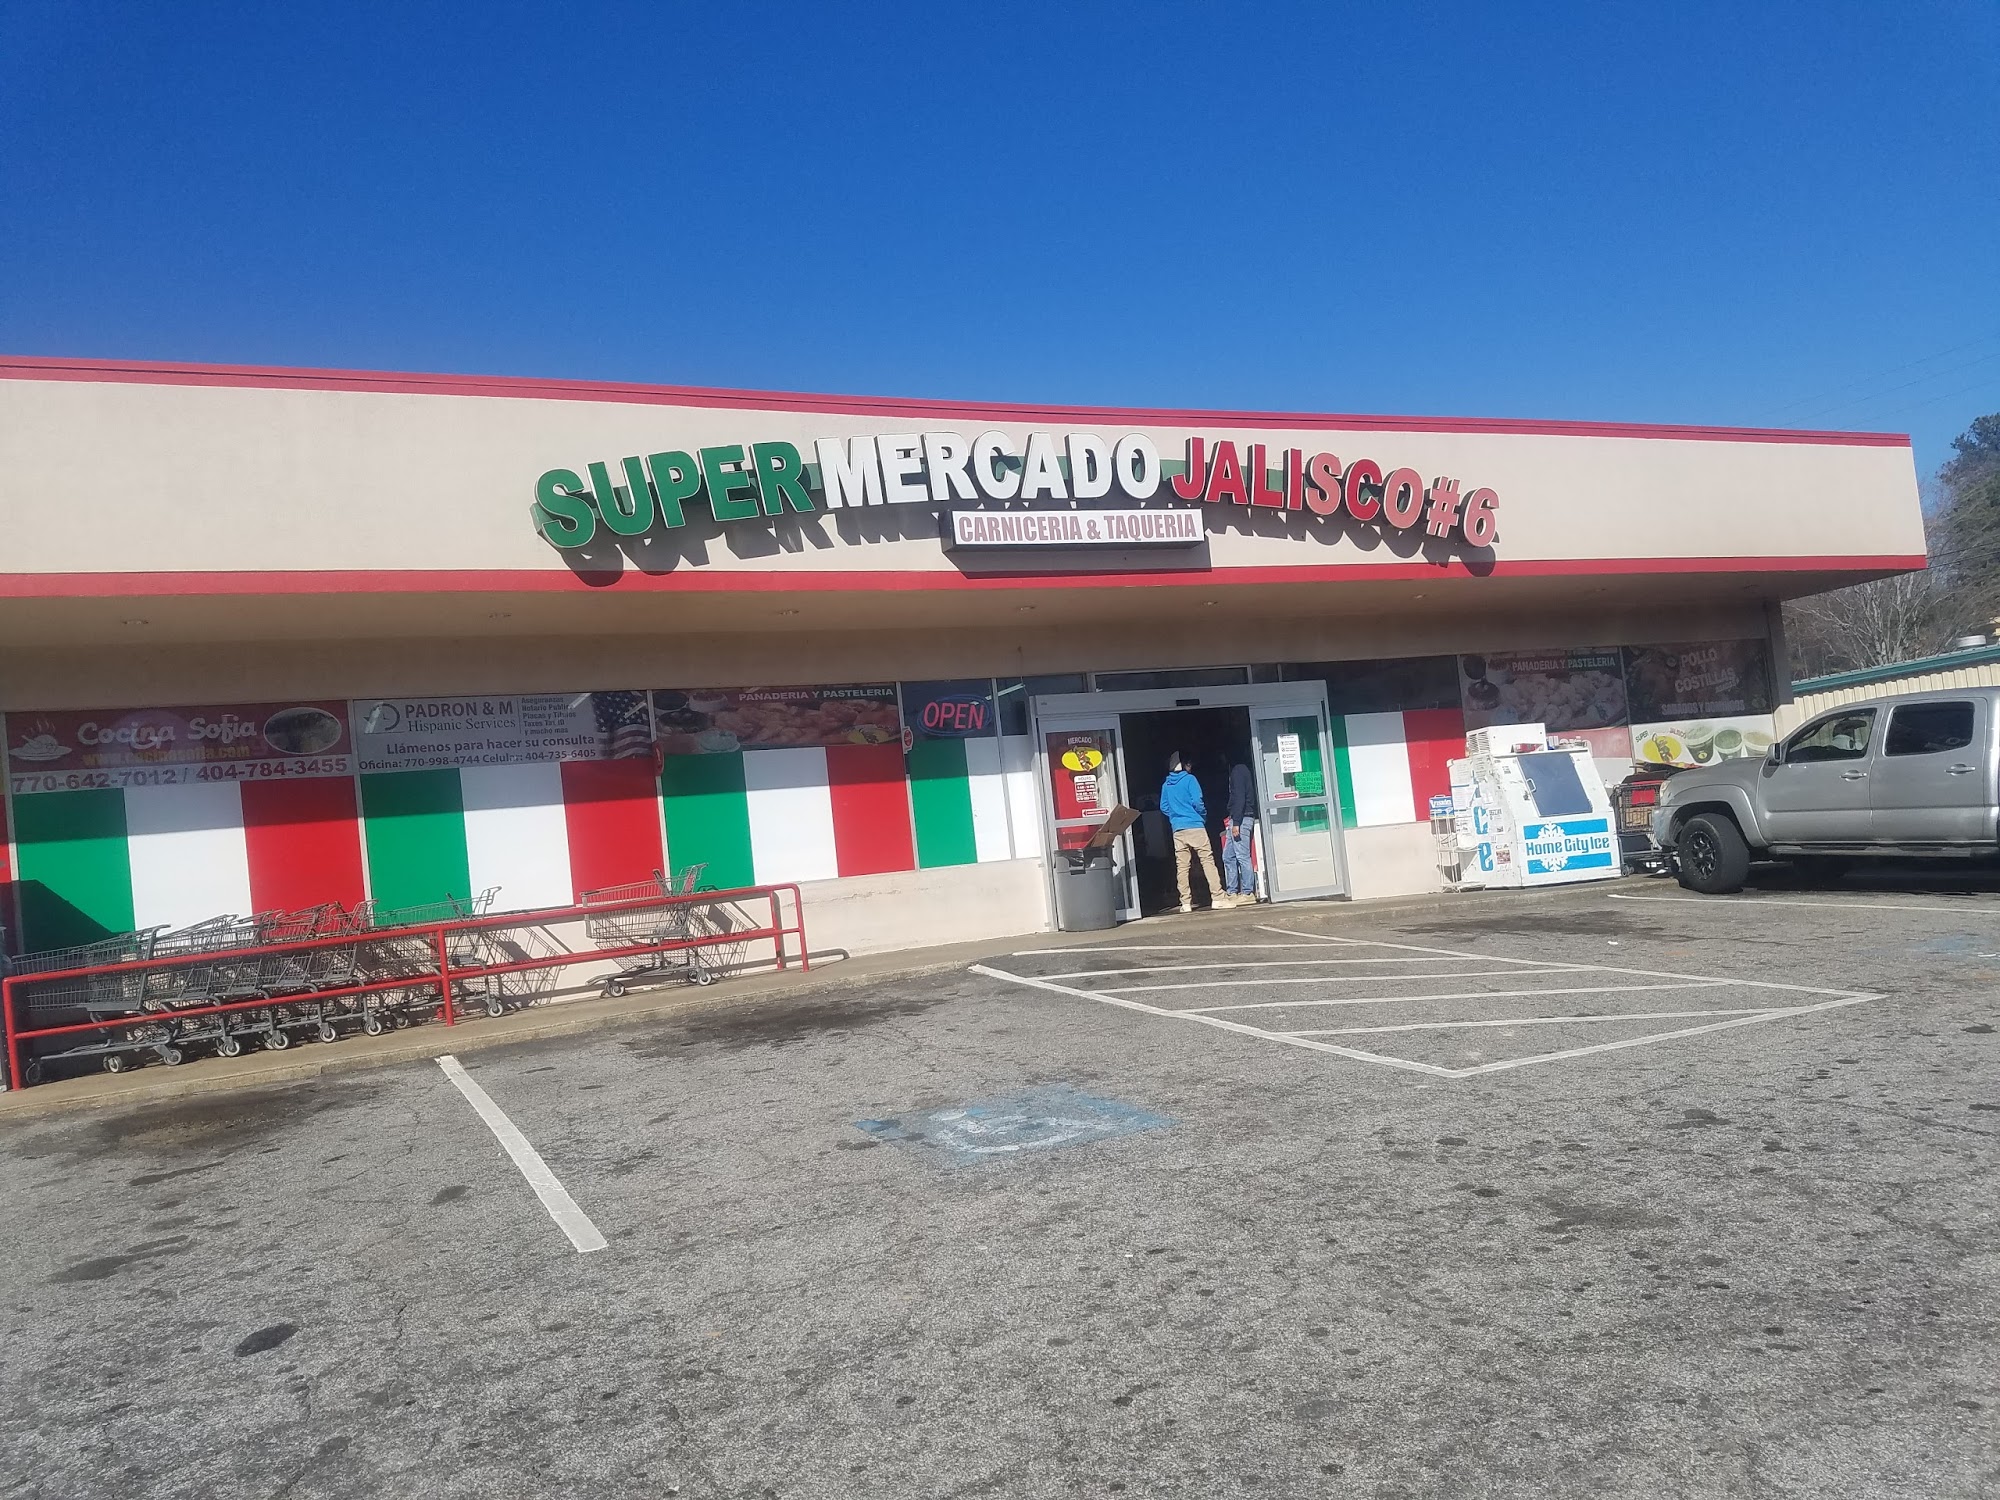 Super Mercado Jalisco